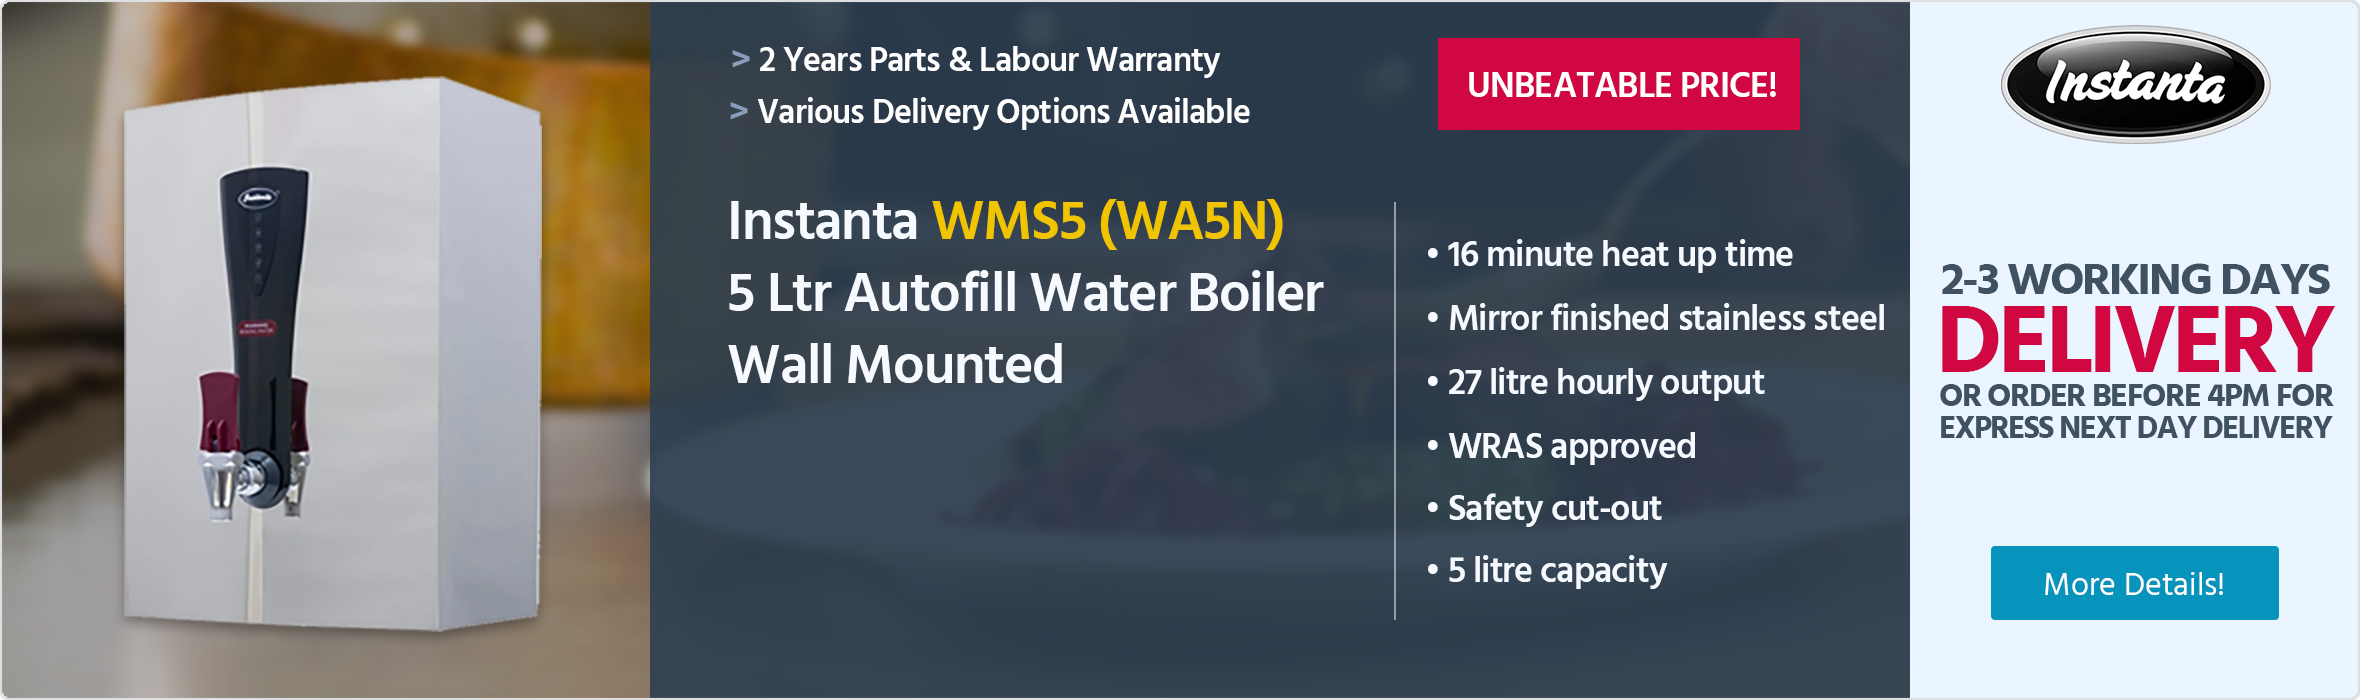 Instanta WMS5 (WA5N) 5 Ltr Autofill Water Boiler Wall Mounted